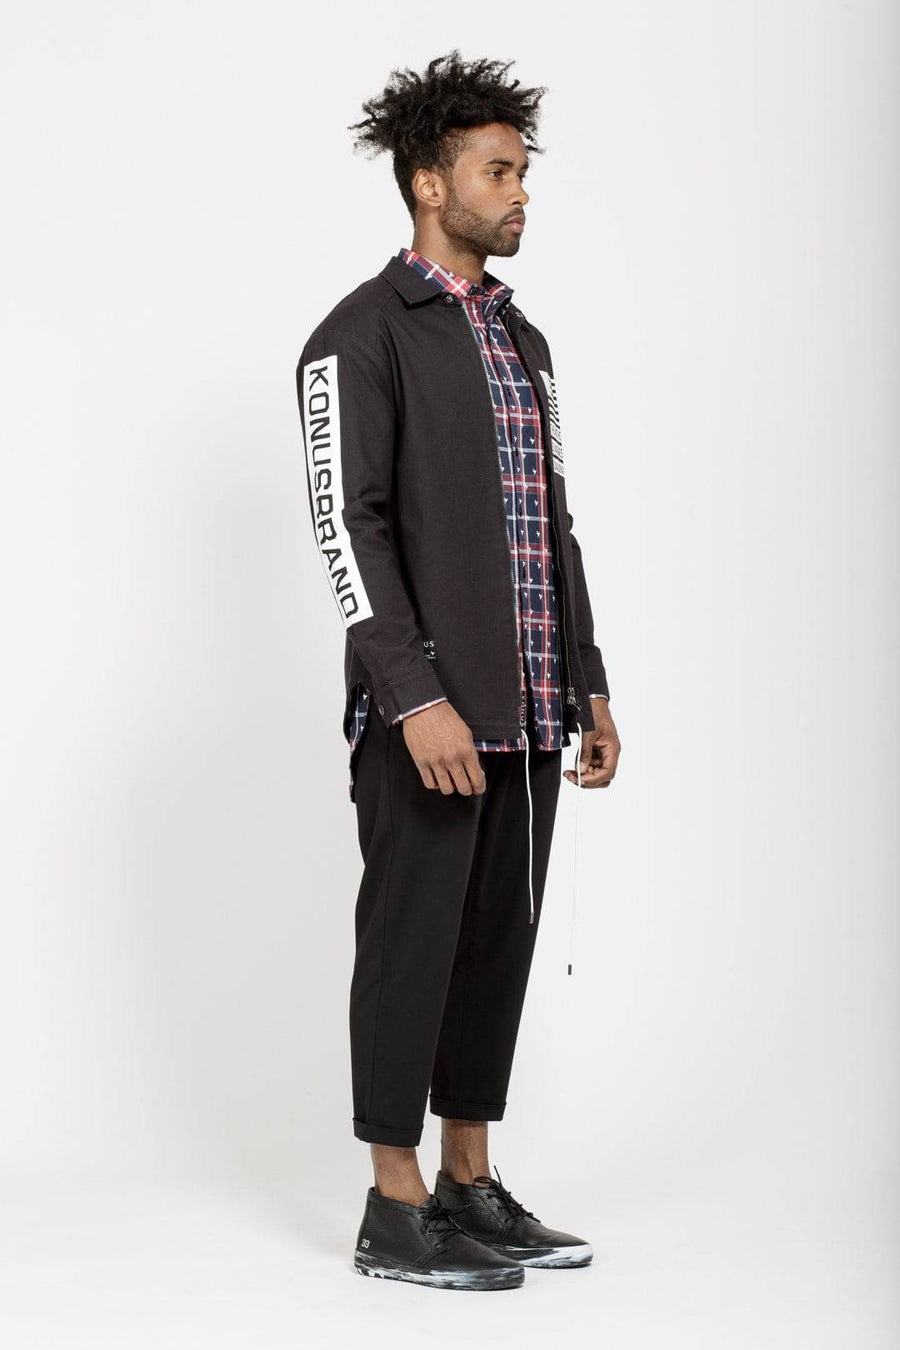 Konus Men's Coaches Jacket With Graphic in Black - shopatkonus